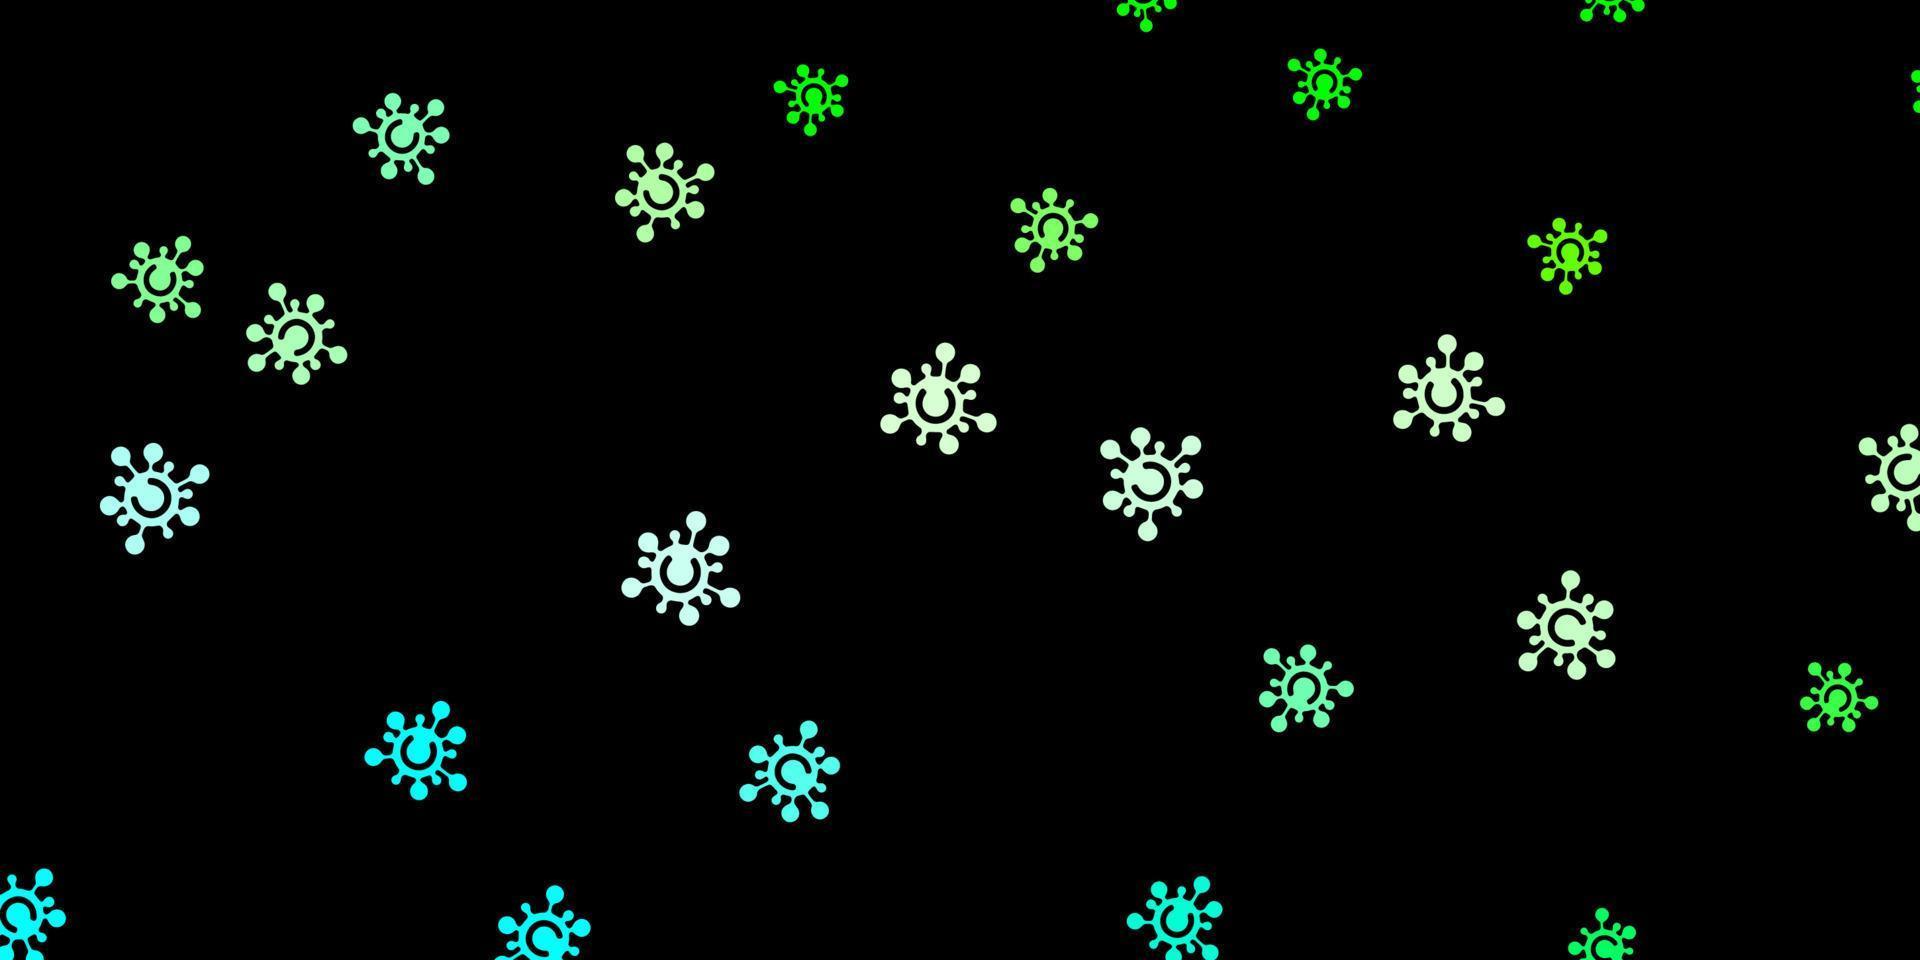 Dark green vector pattern with coronavirus elements.